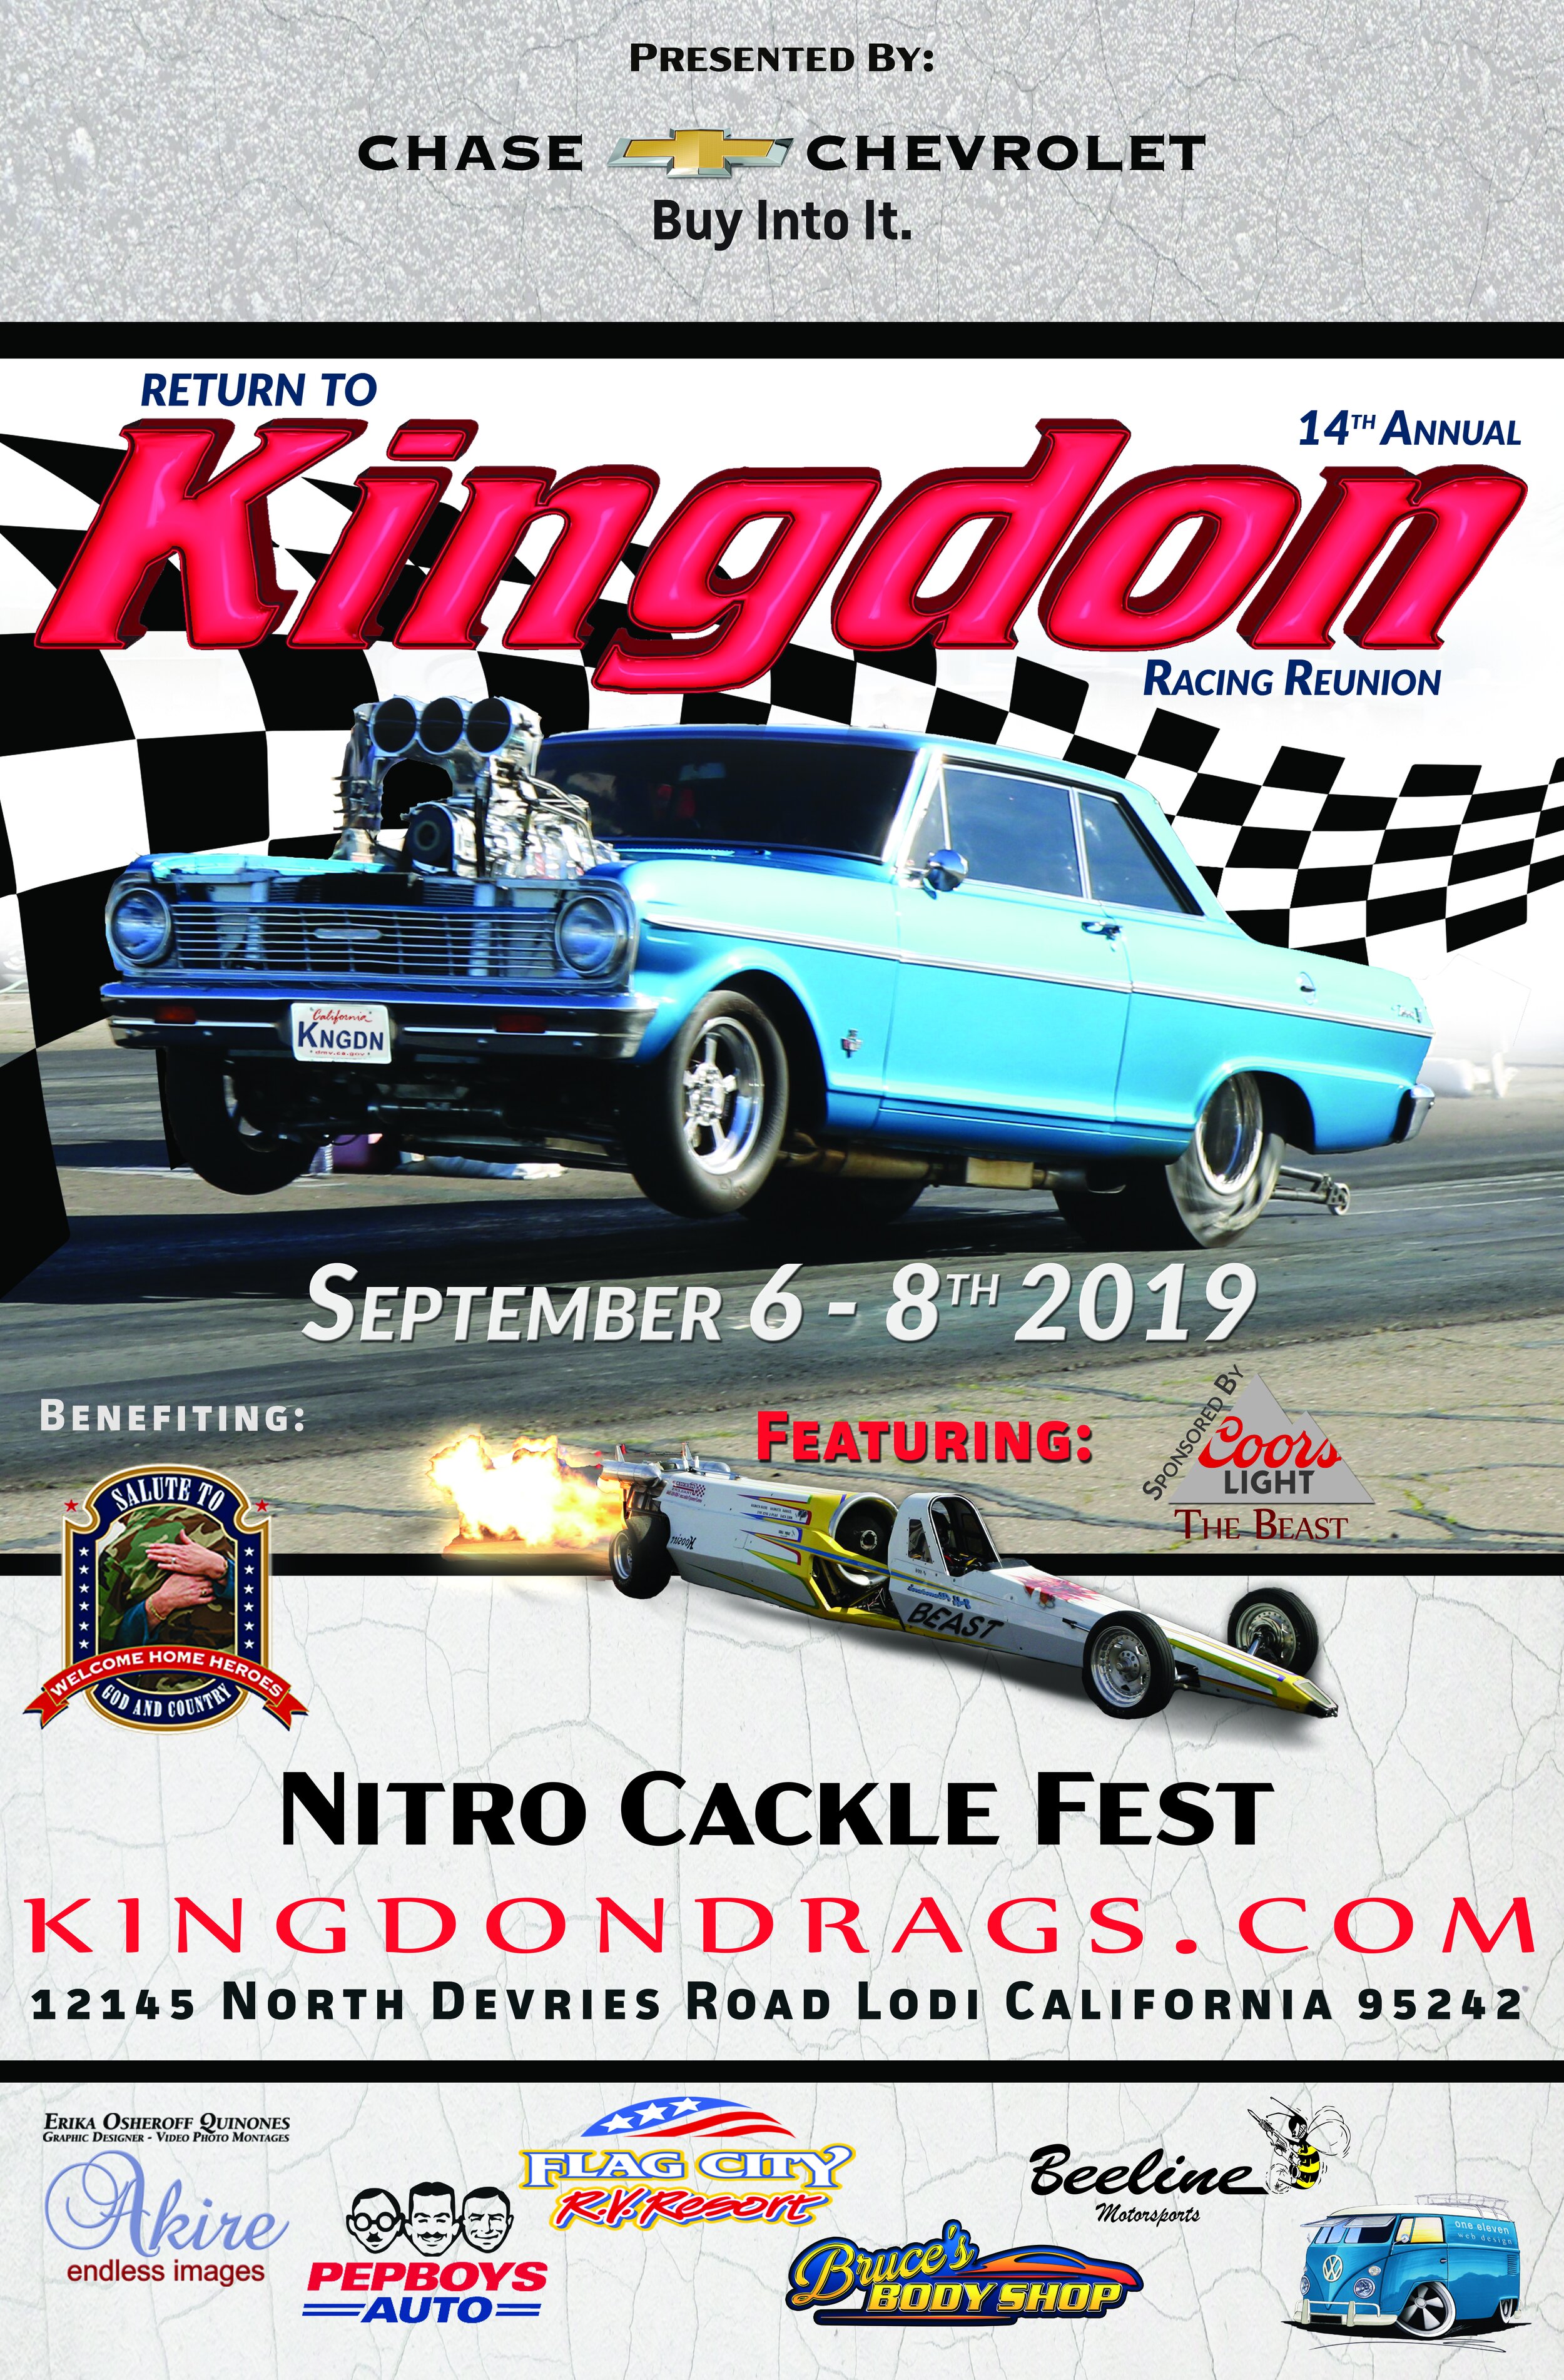  2019 Kingdon Drags September Event Poster   